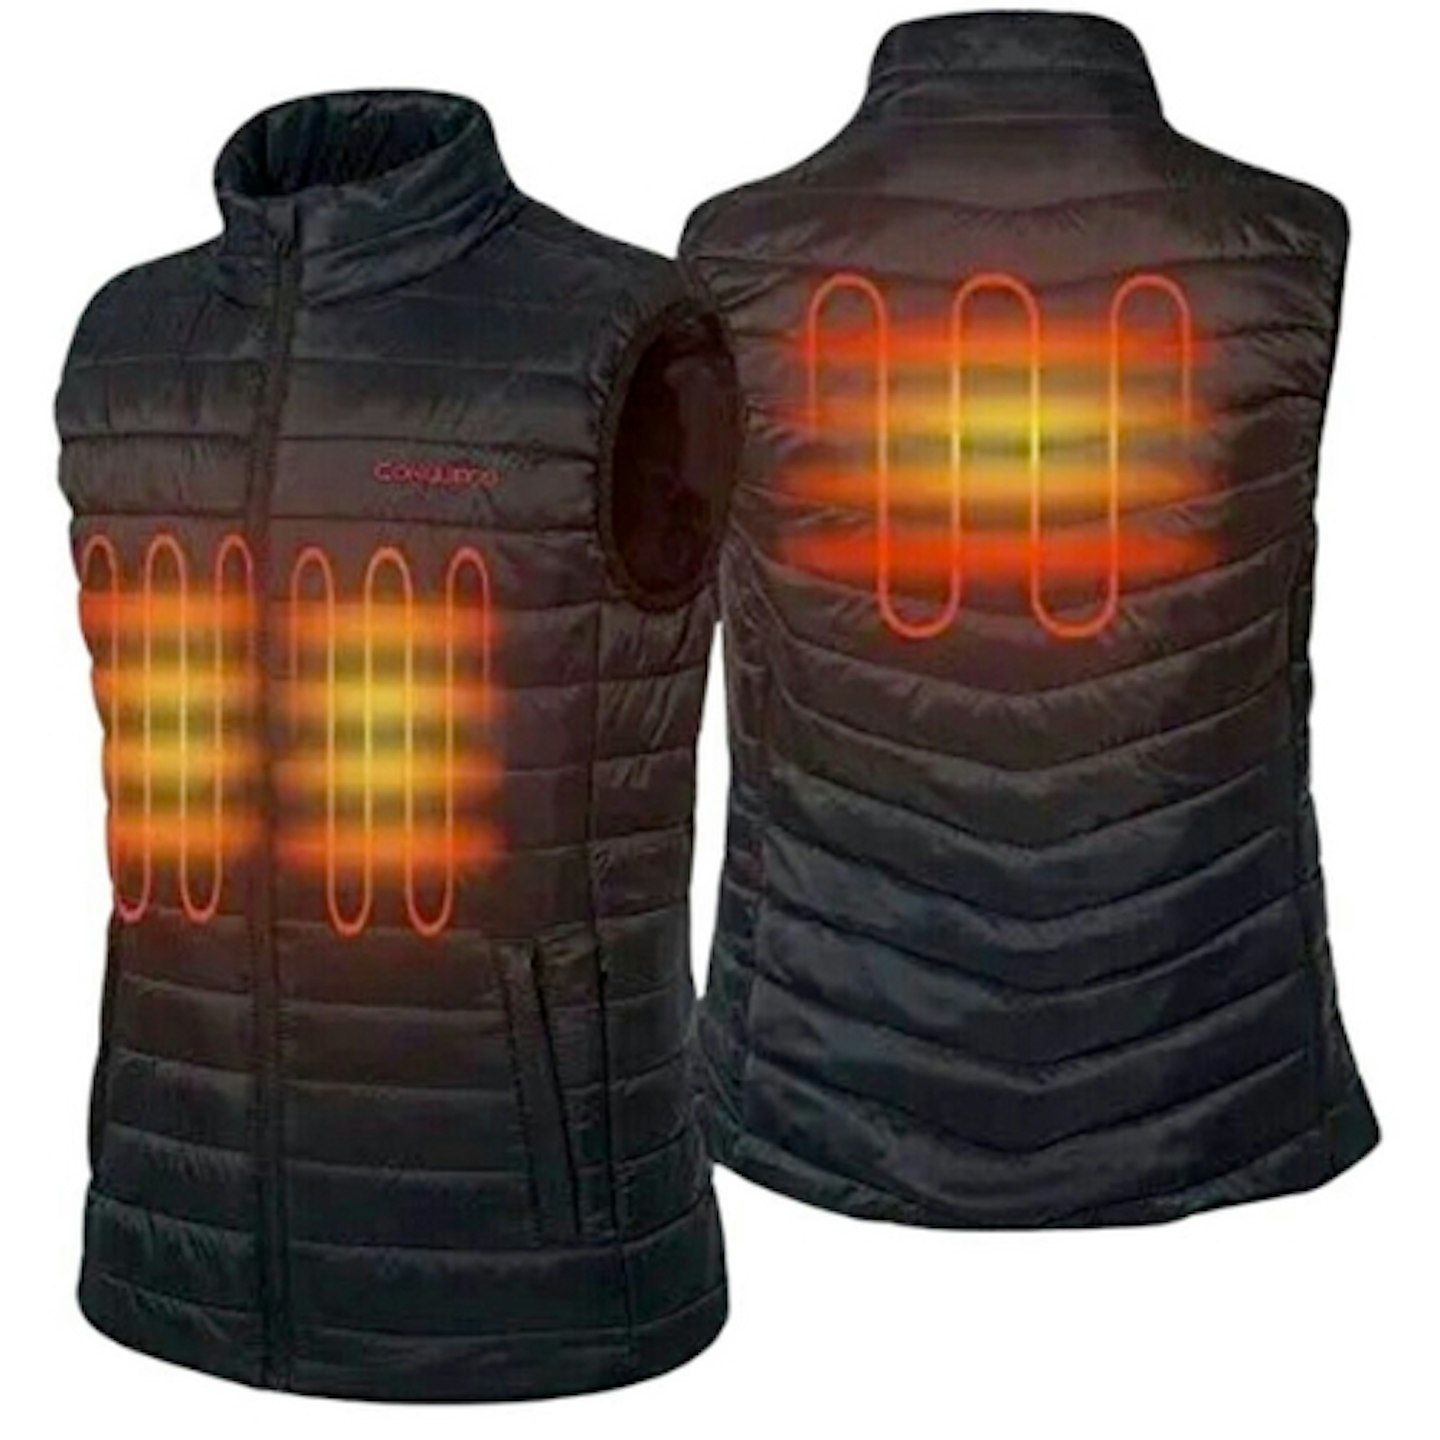 heated garden vest jacket